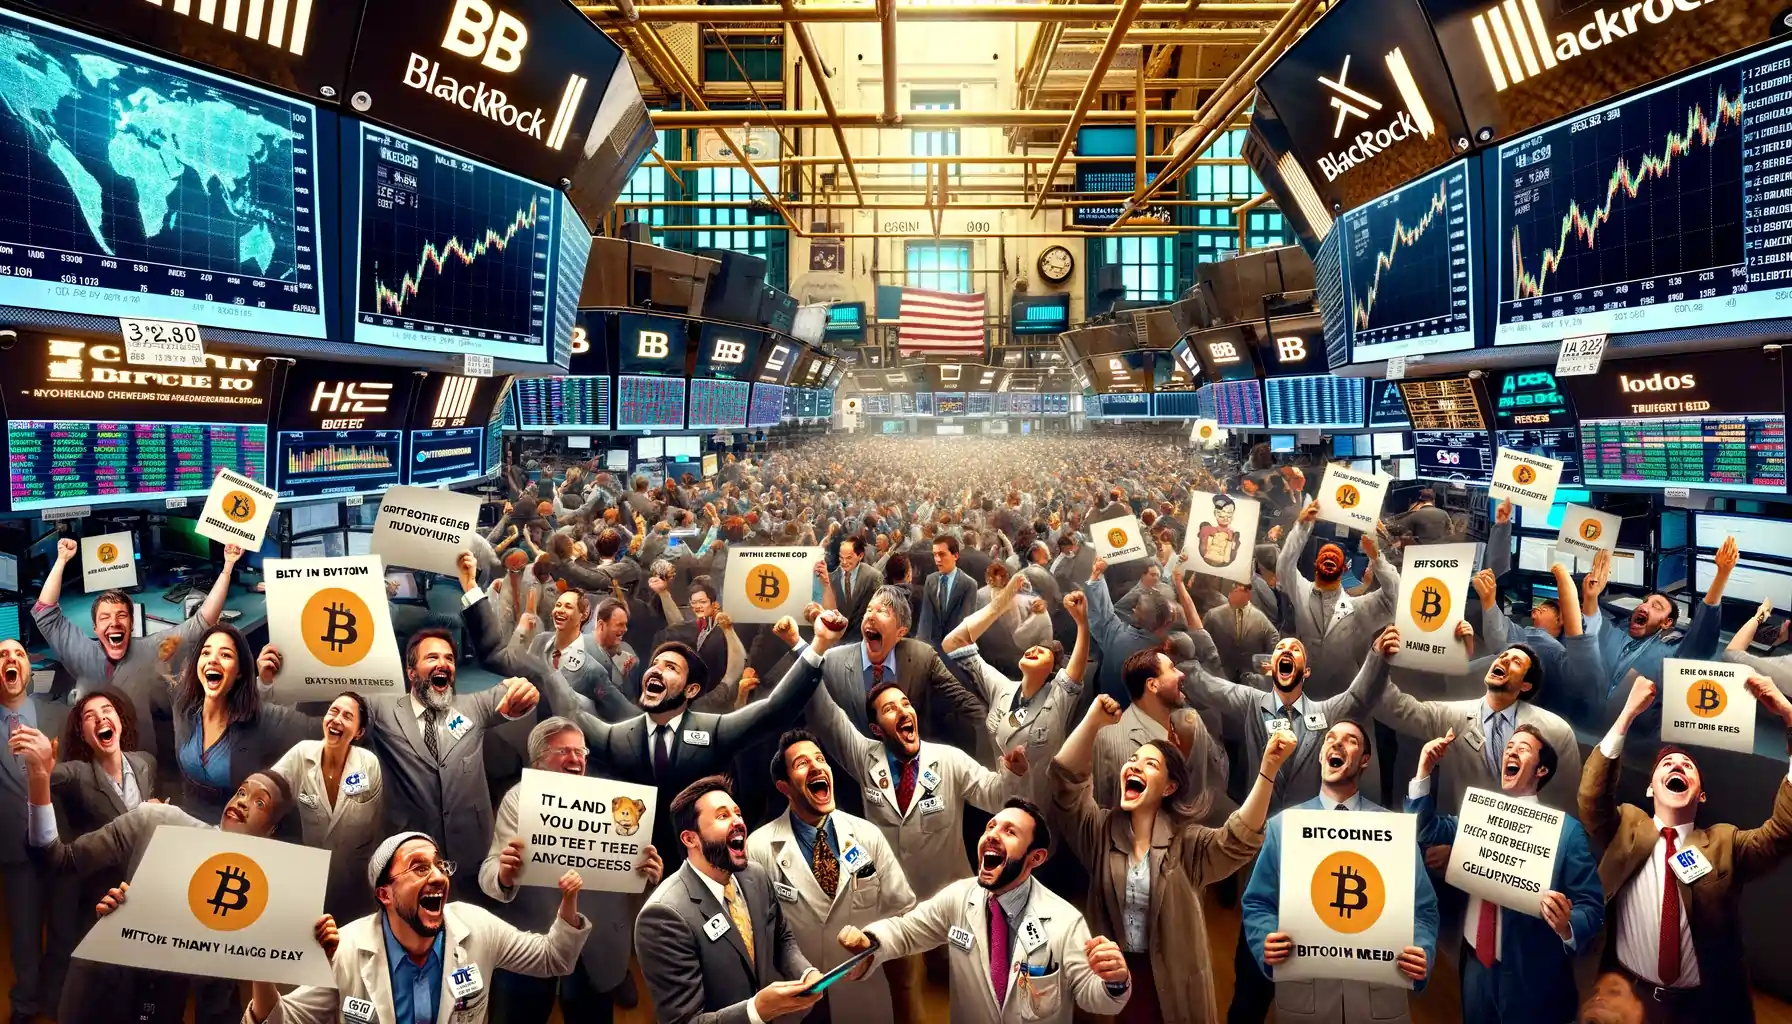 Bitcoin Memes and Market Movements - BlackRock's Bitcoin ETF Celebrates Halving Day Success